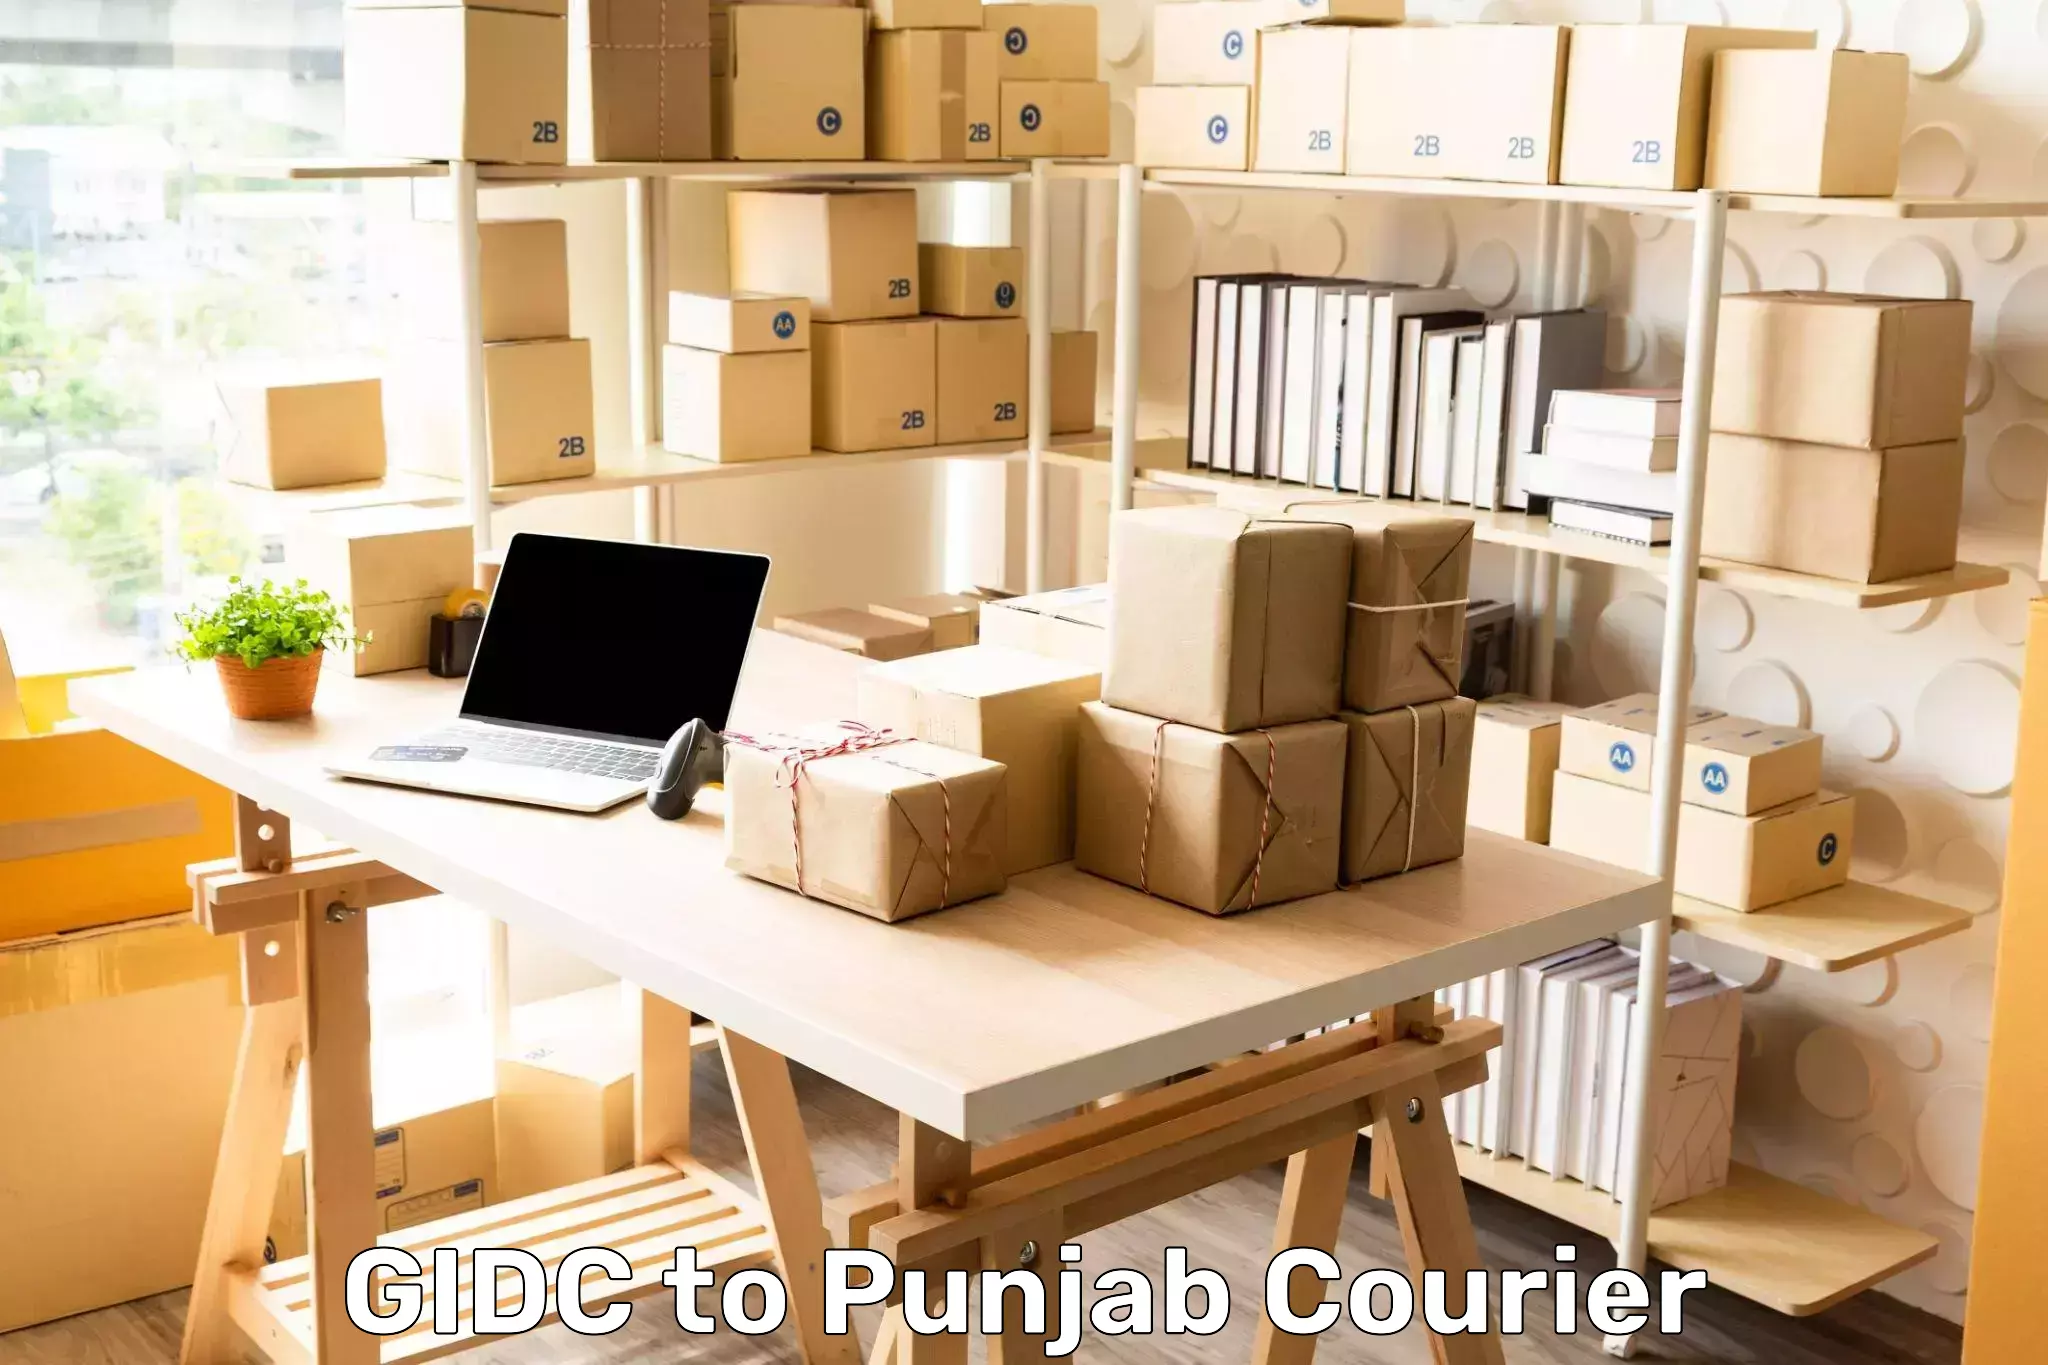 Urban courier service GIDC to Punjab